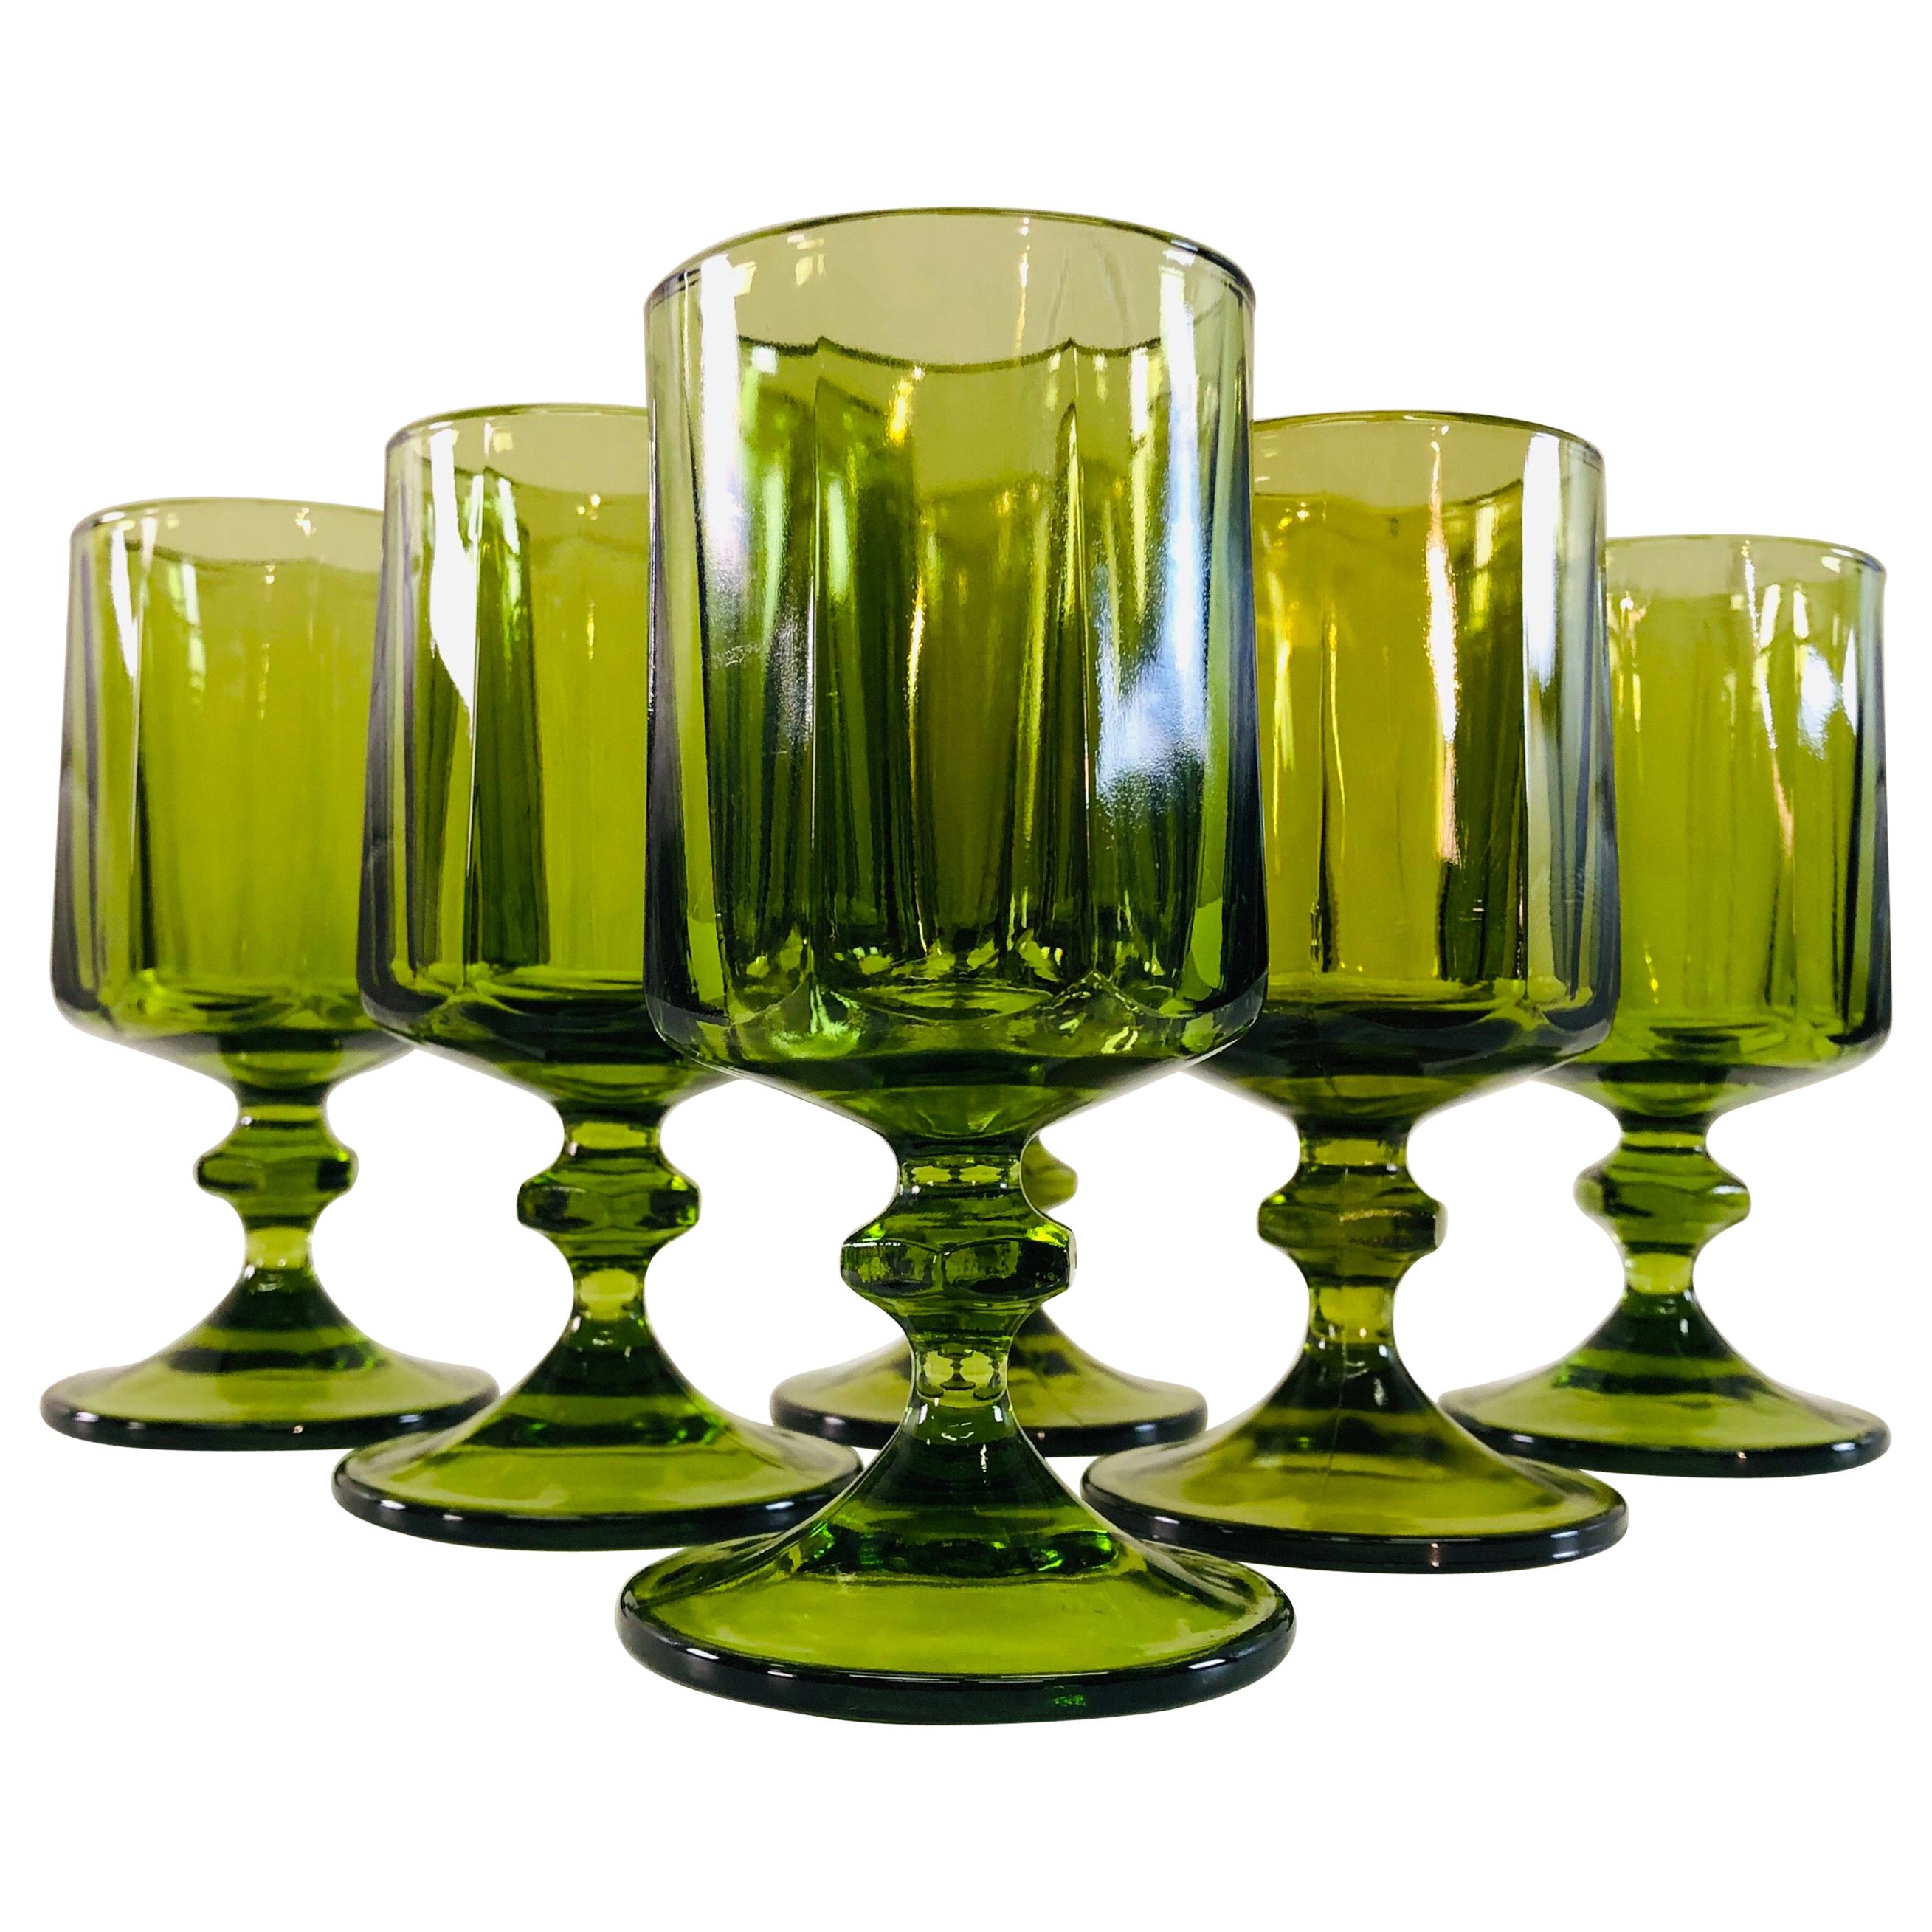 https://a.1stdibscdn.com/vintage-1960s-green-glass-wine-stems-set-of-6-for-sale/1121189/f_202083321597729107504/20208332_master.jpg